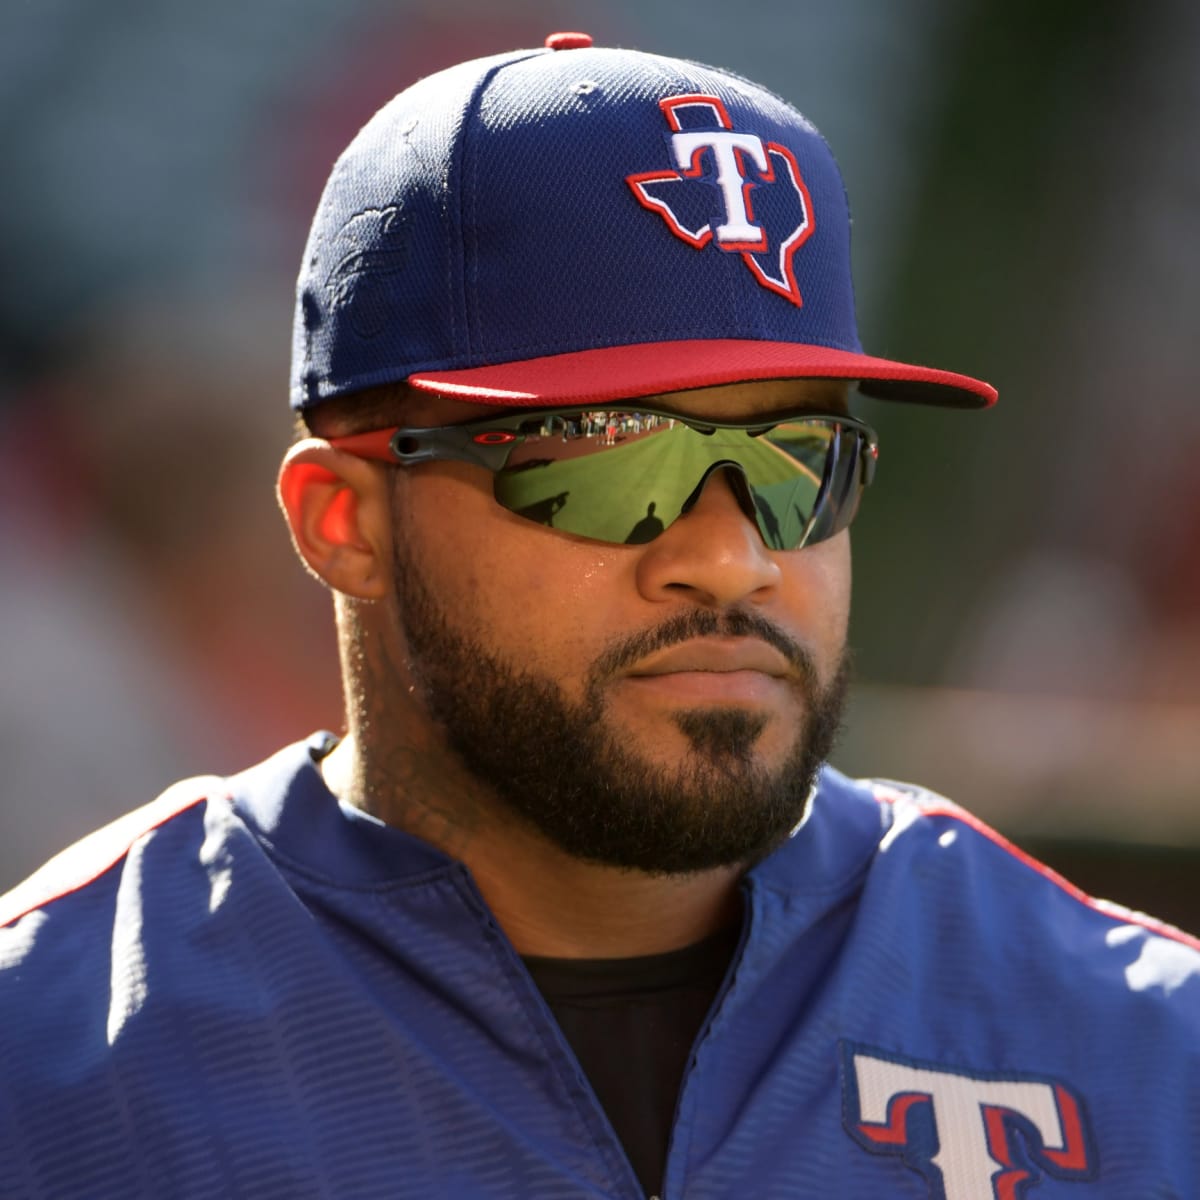 Prince Fielder - Texas Rangers Designated Hitter - ESPN